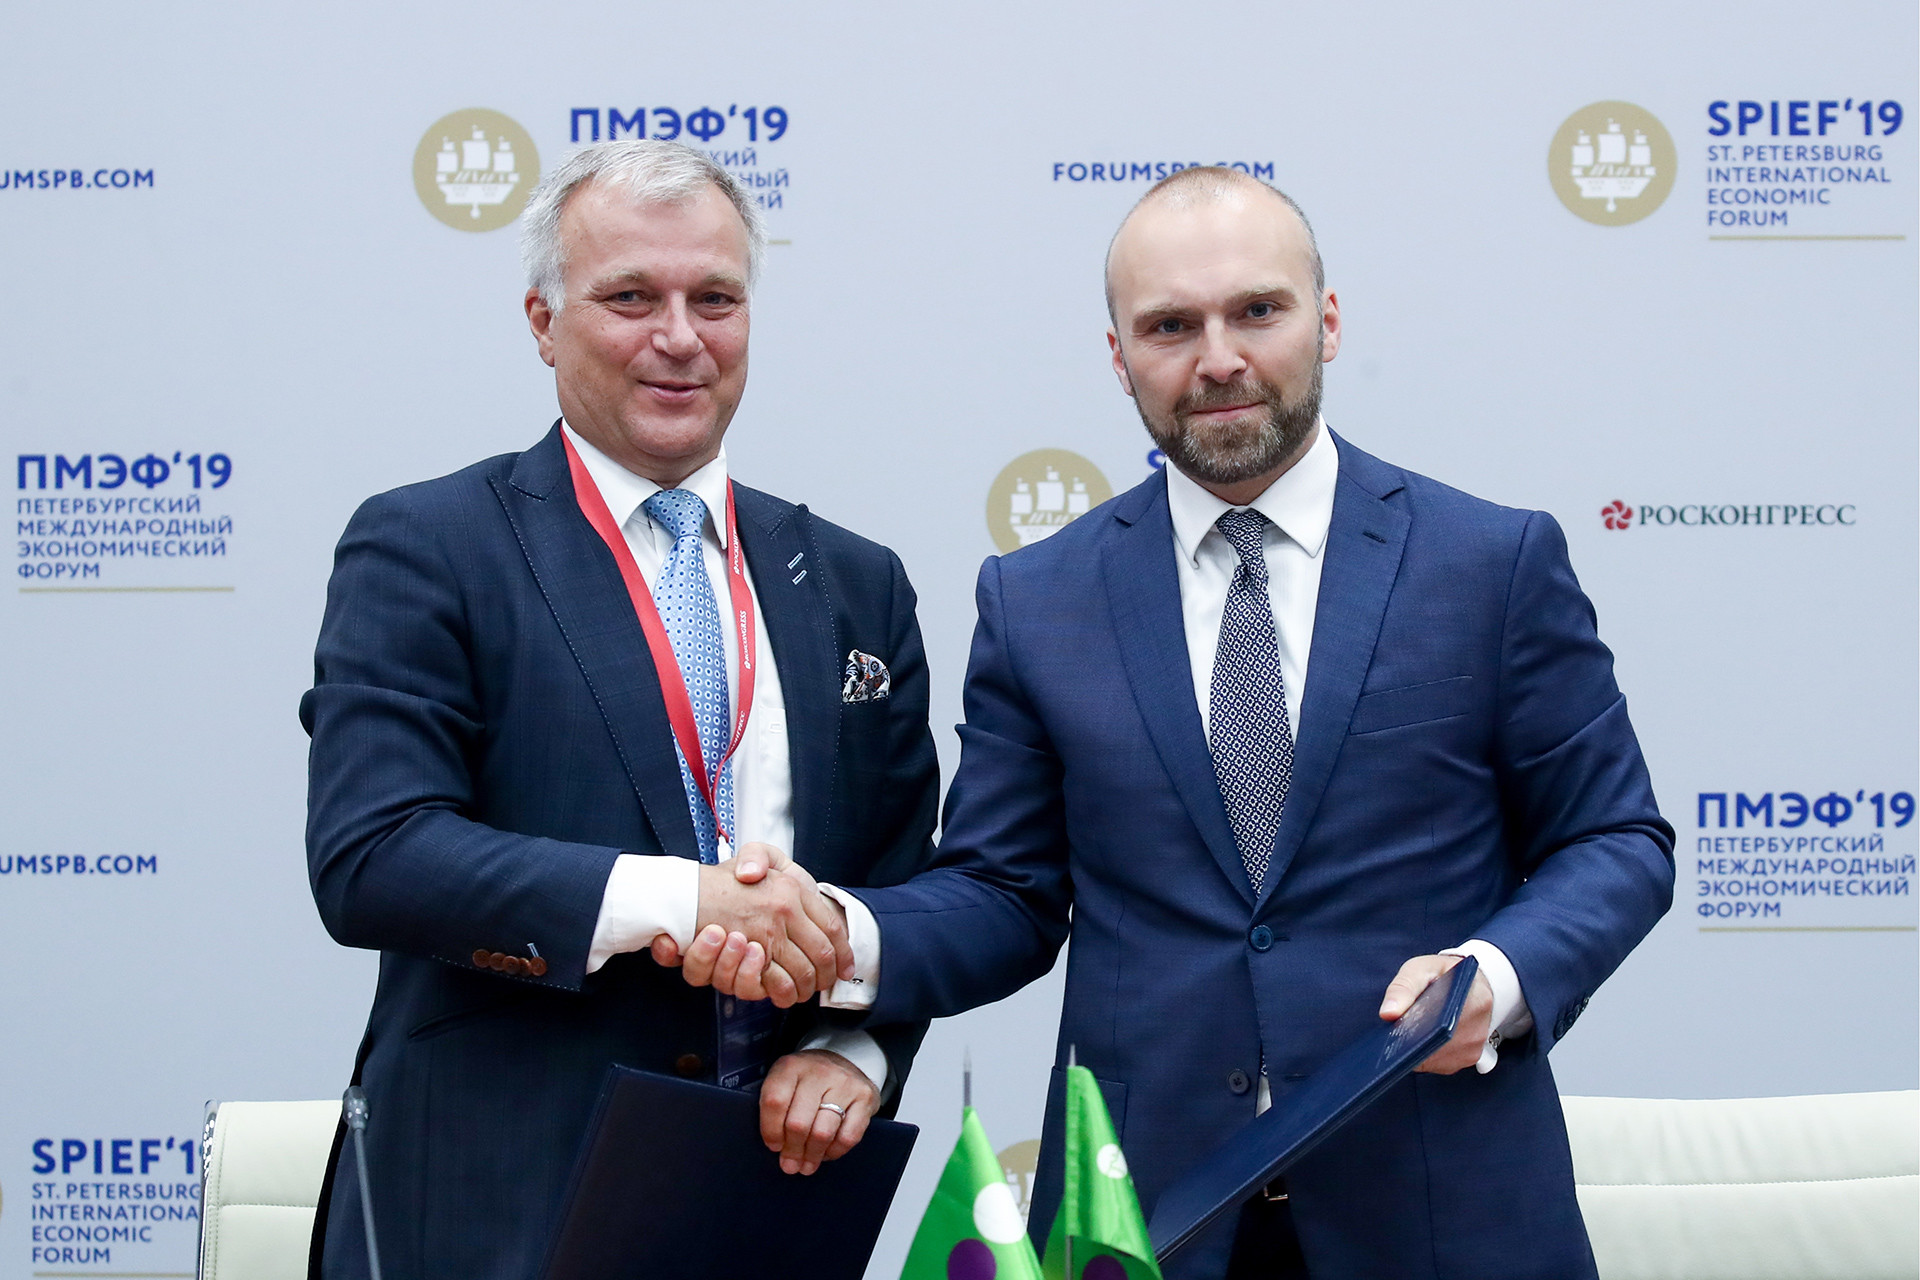 Ari-Jussi Knaapila, President and CEO of Cinia Oy, (left) and Gevork Vermishyan, CEO of MegaFon